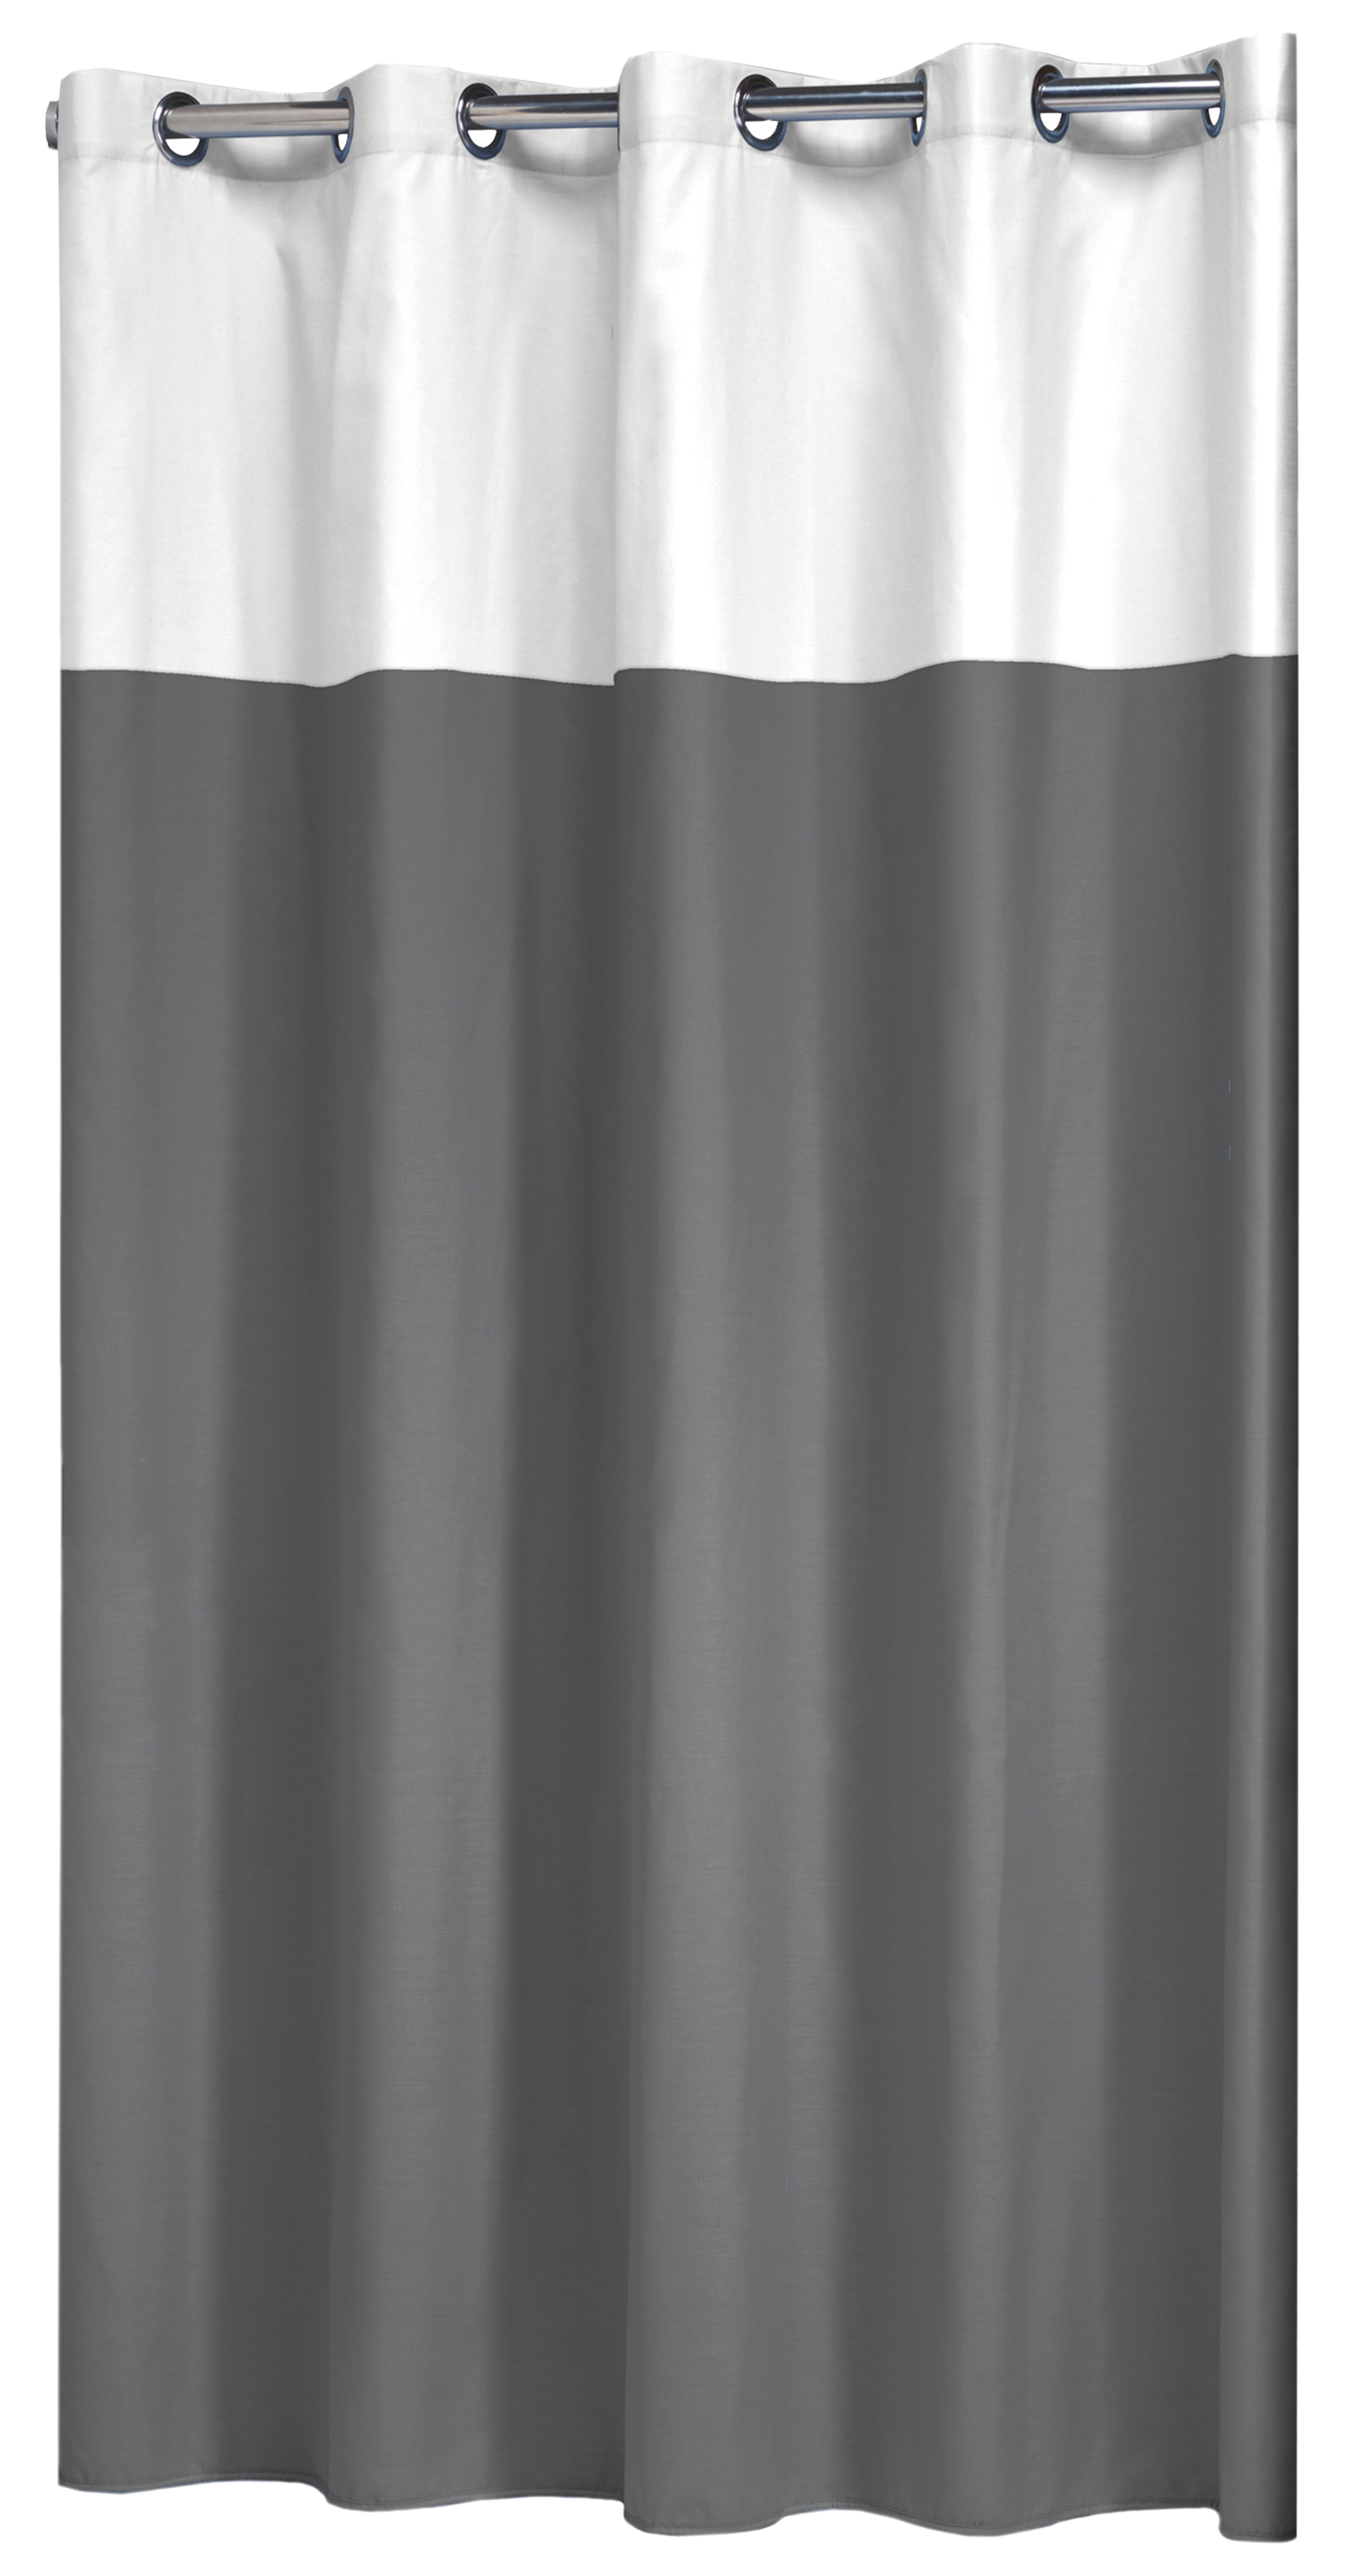 Cortina de baño double gris/blanco algodón+poliéster 180x200 cm